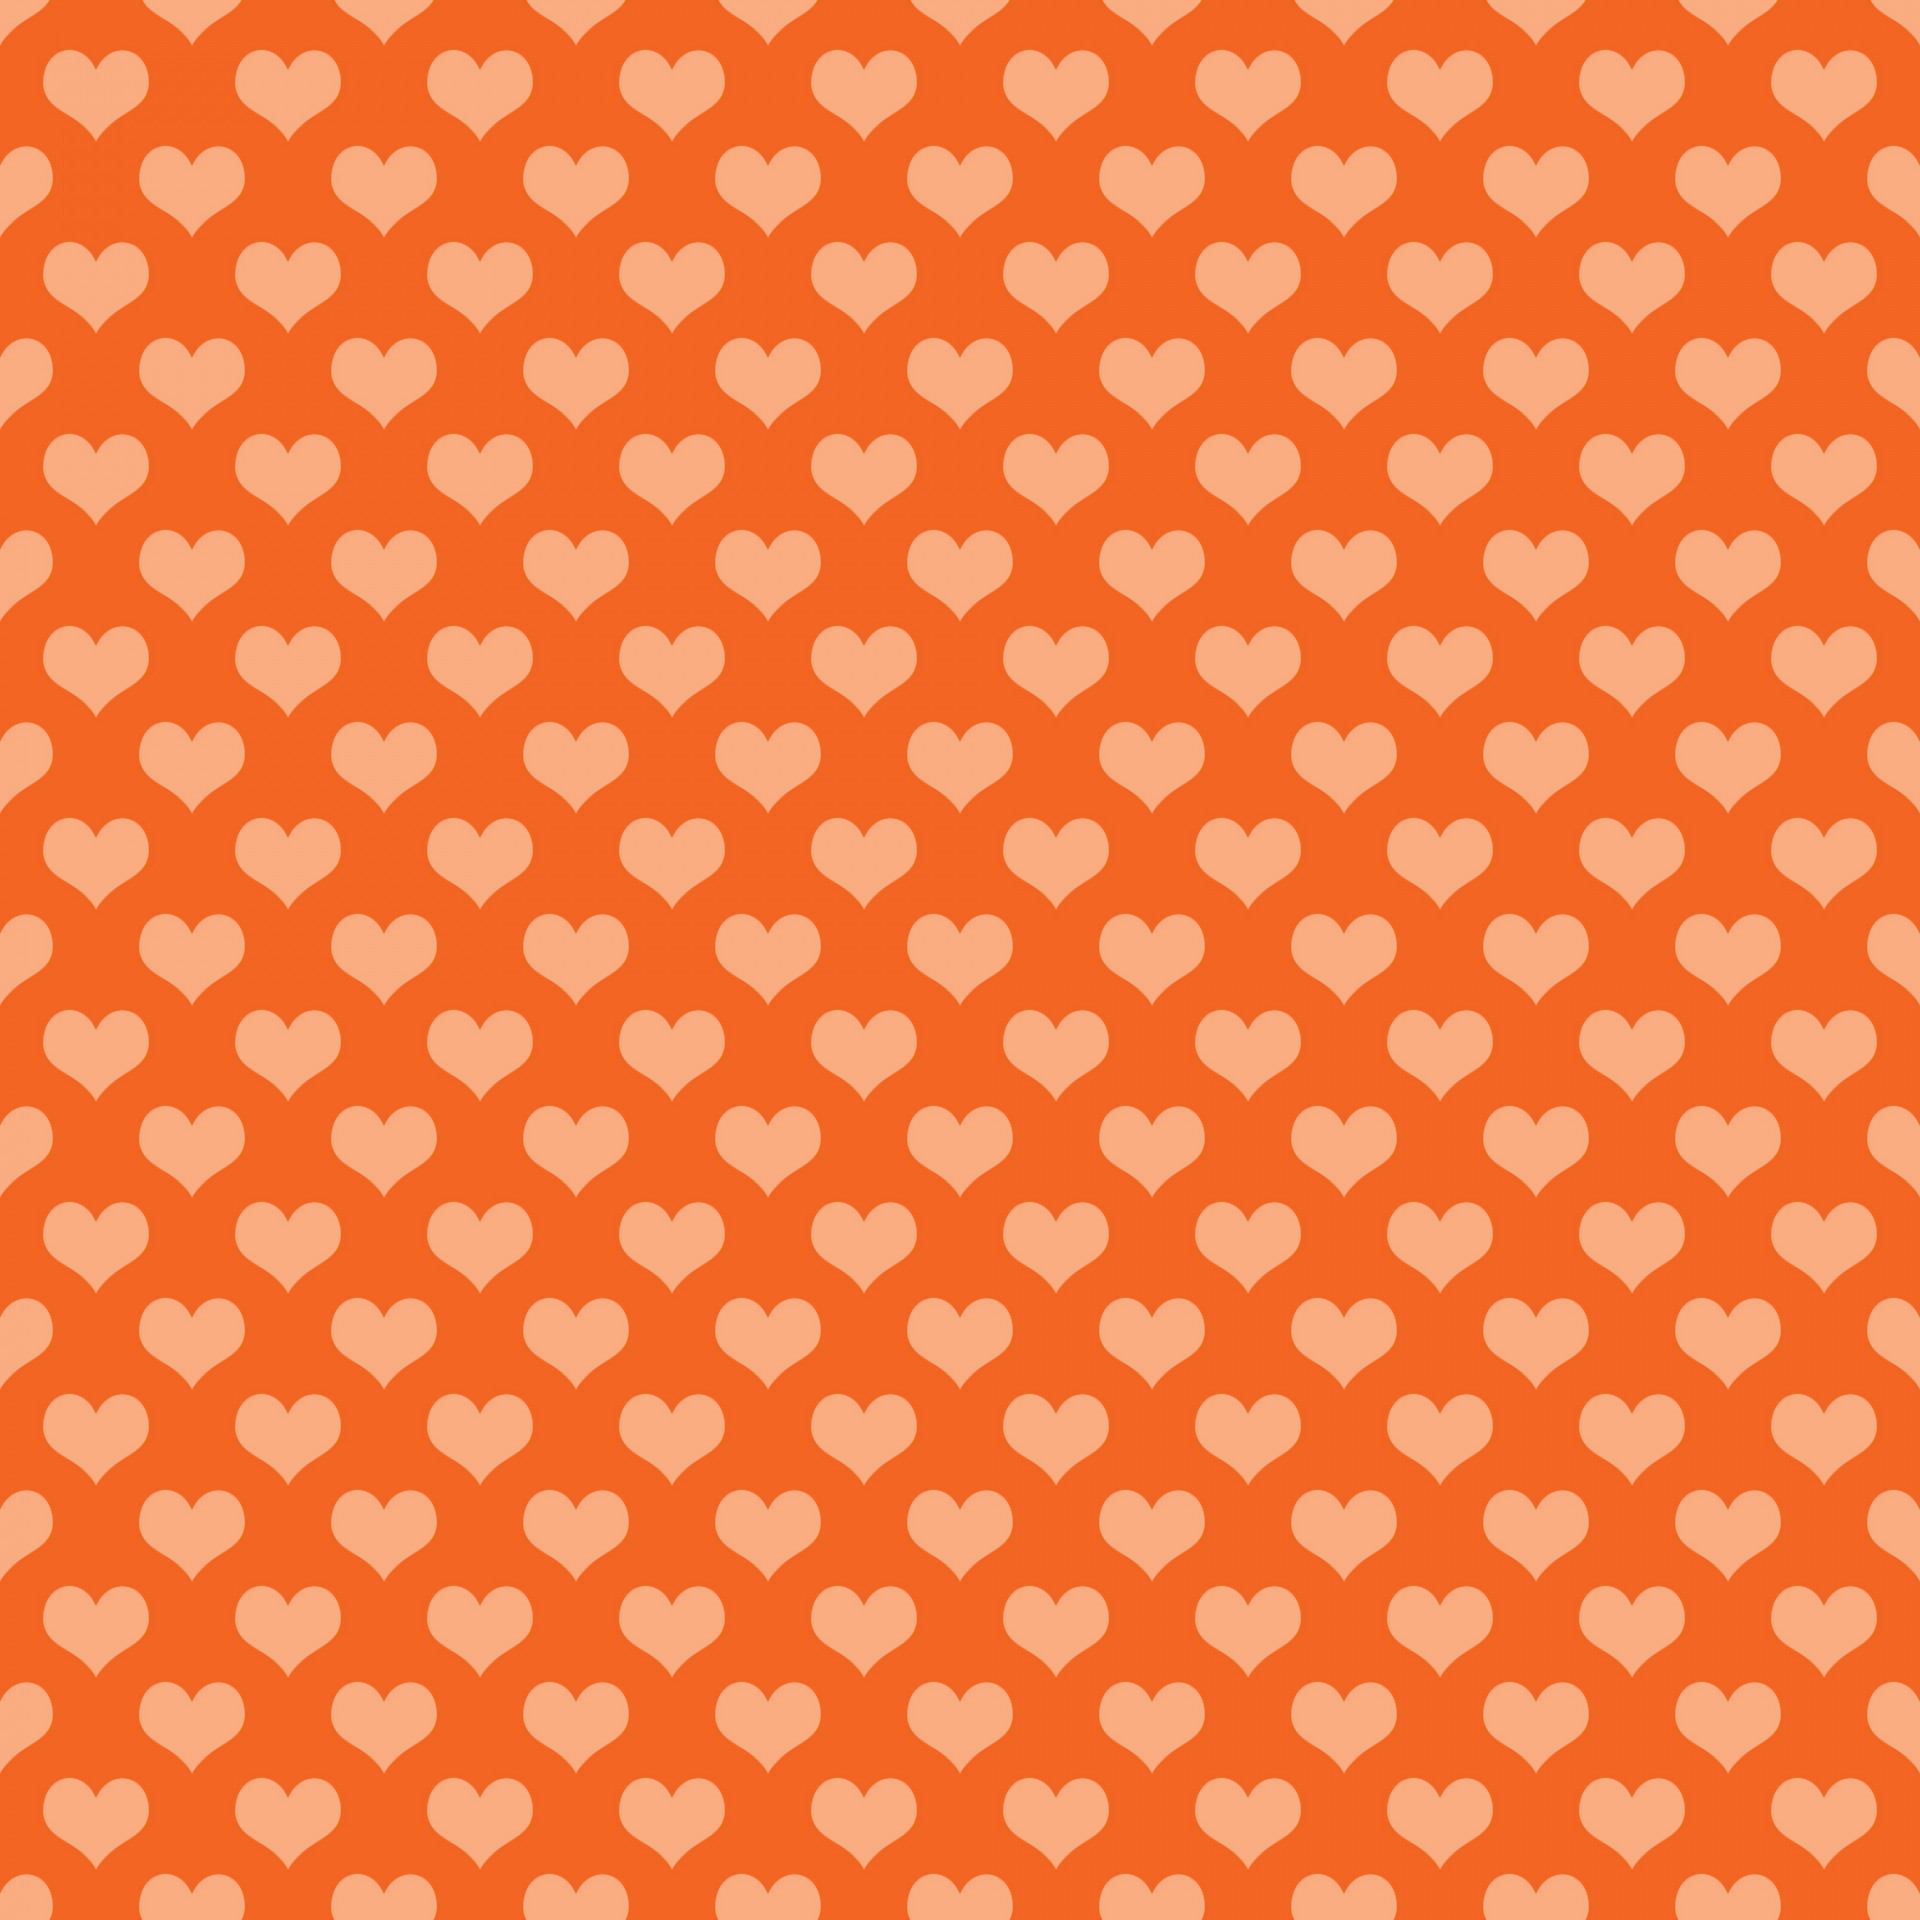 Hearts Background Wallpaper Orange